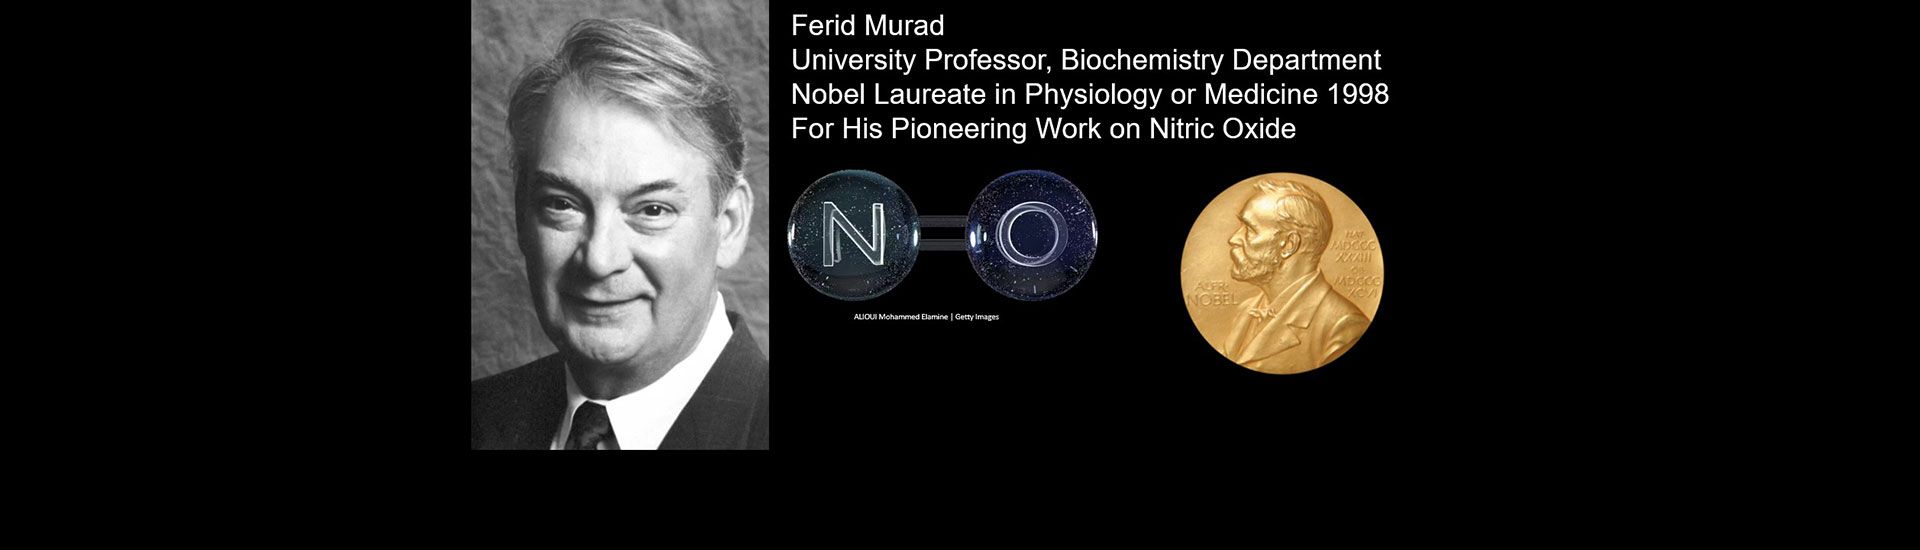 Ferid Murad | "University Professor, Biochemistry Department​  Nobel Laureate in Physiology or Medicine 1998 For His Pioneering Work on Nitric Oxide​"